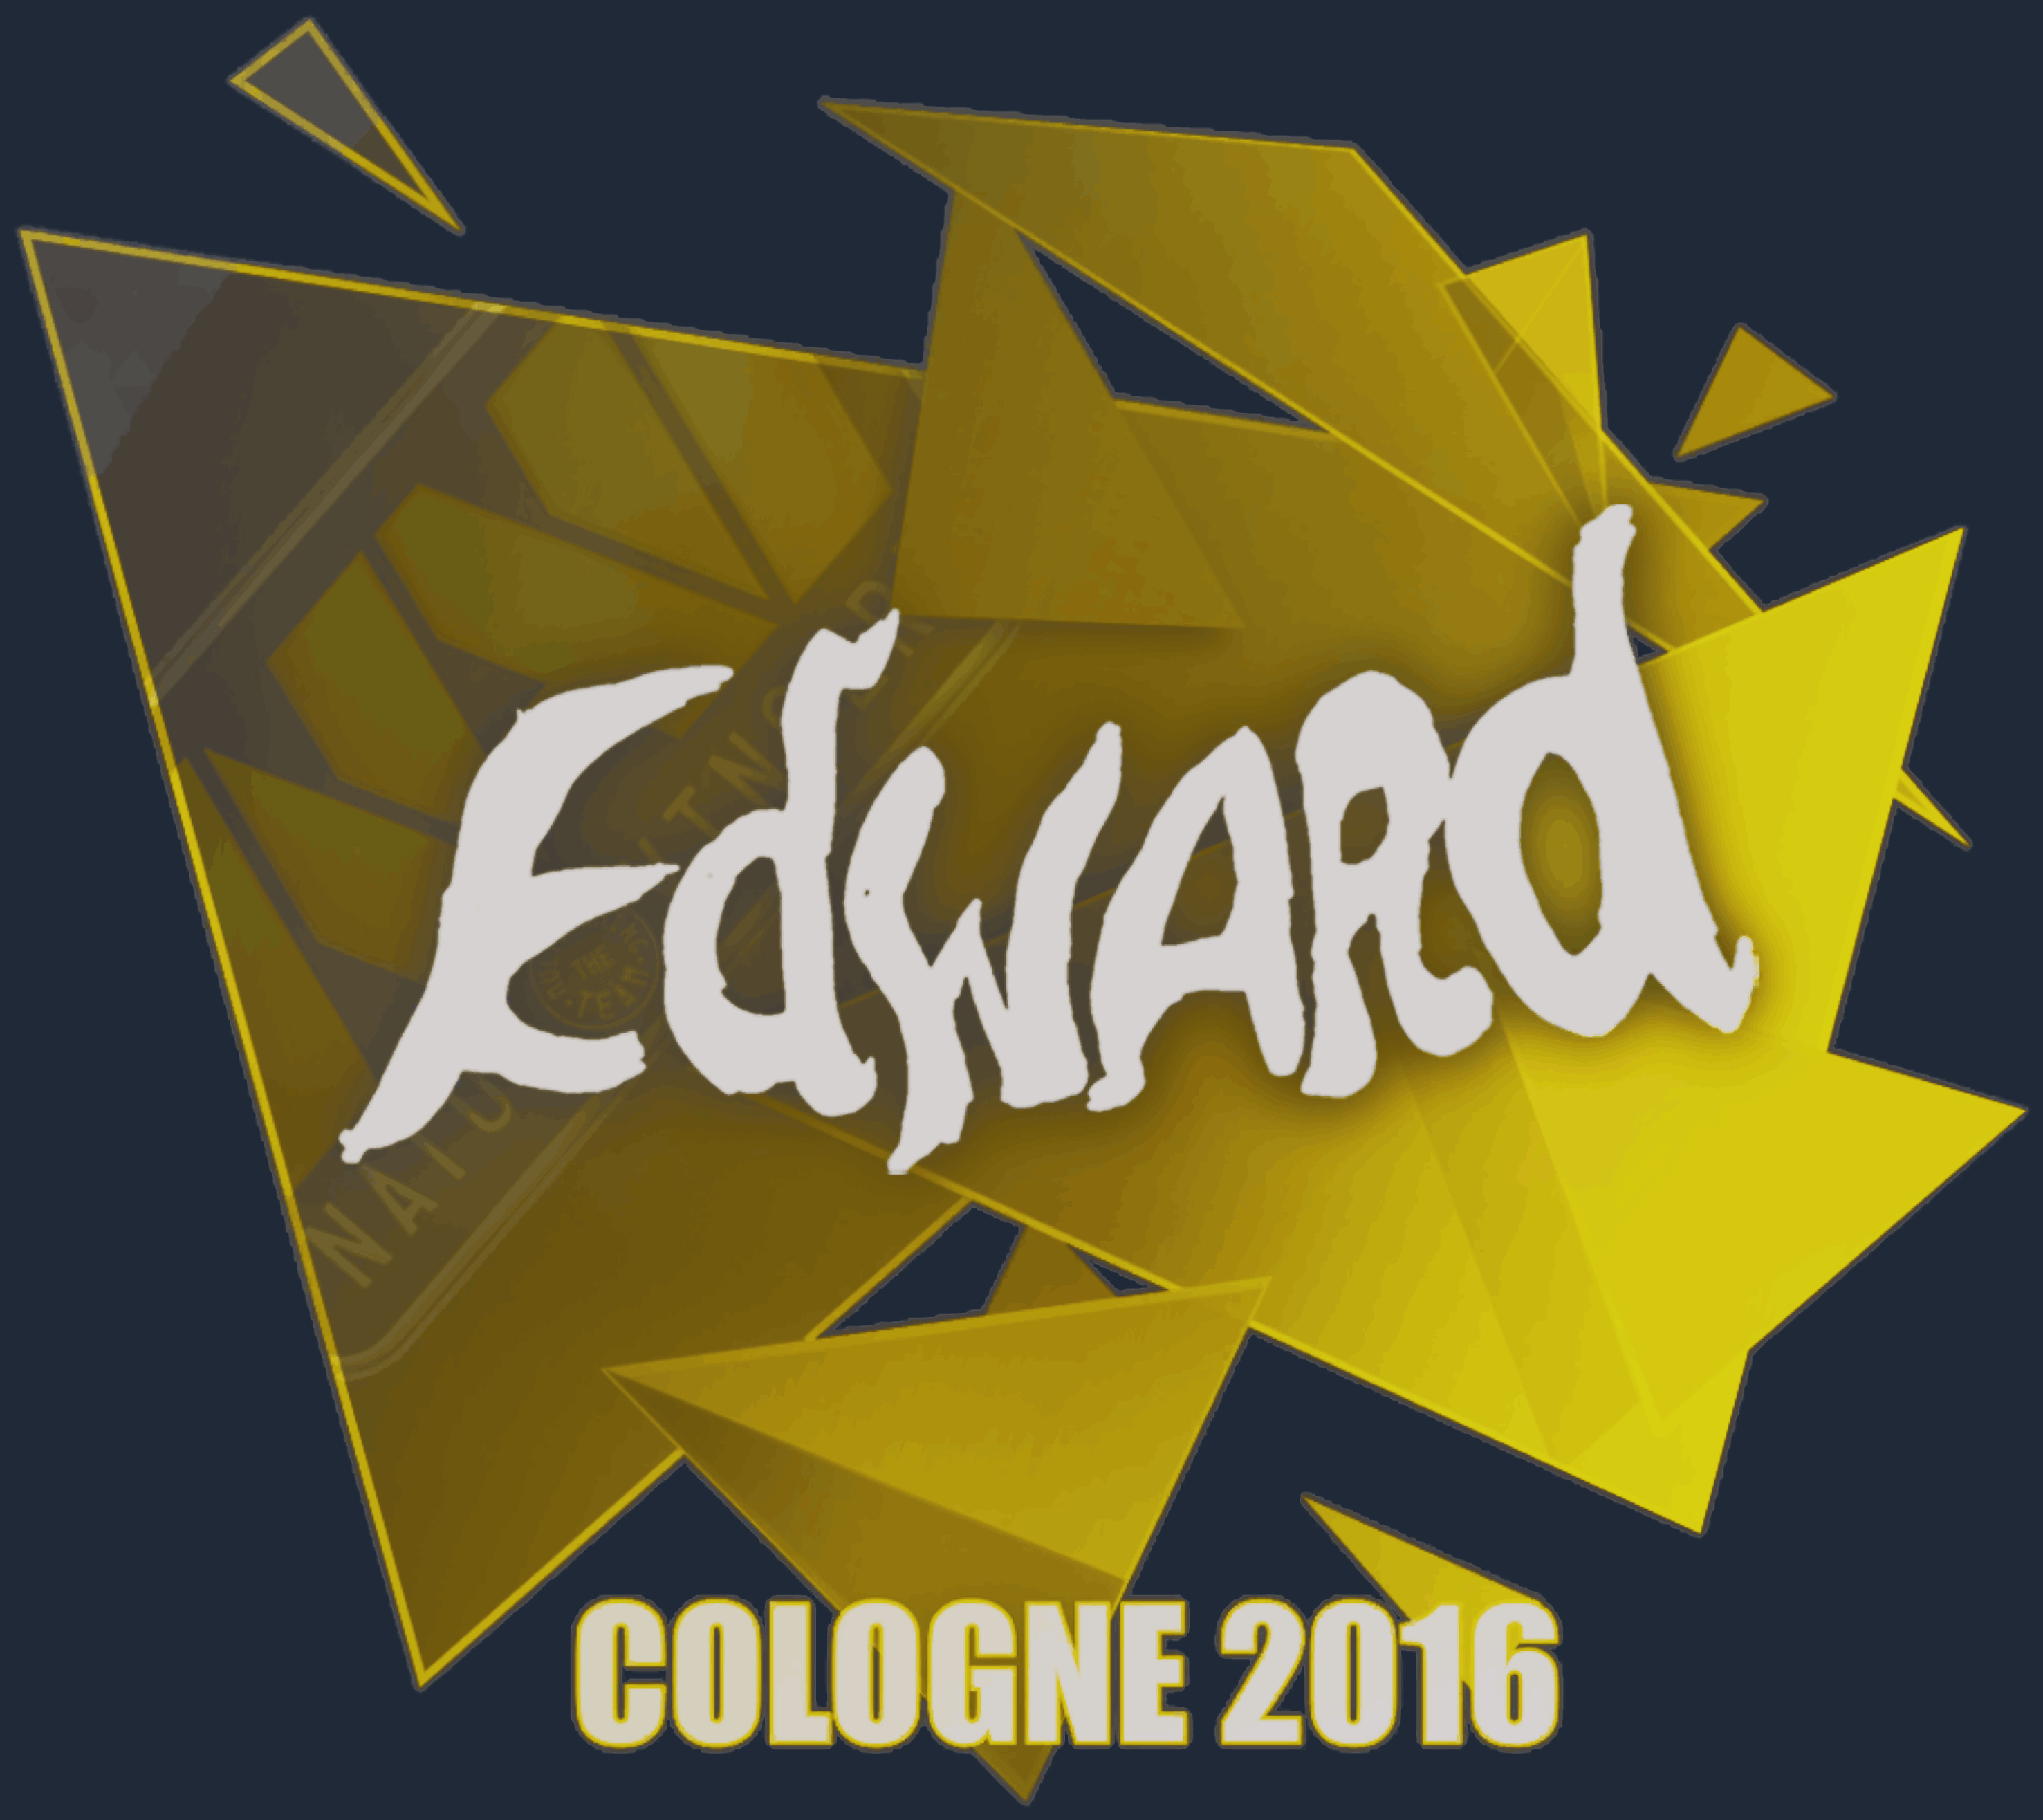 Sticker | Edward | Cologne 2016 Screenshot